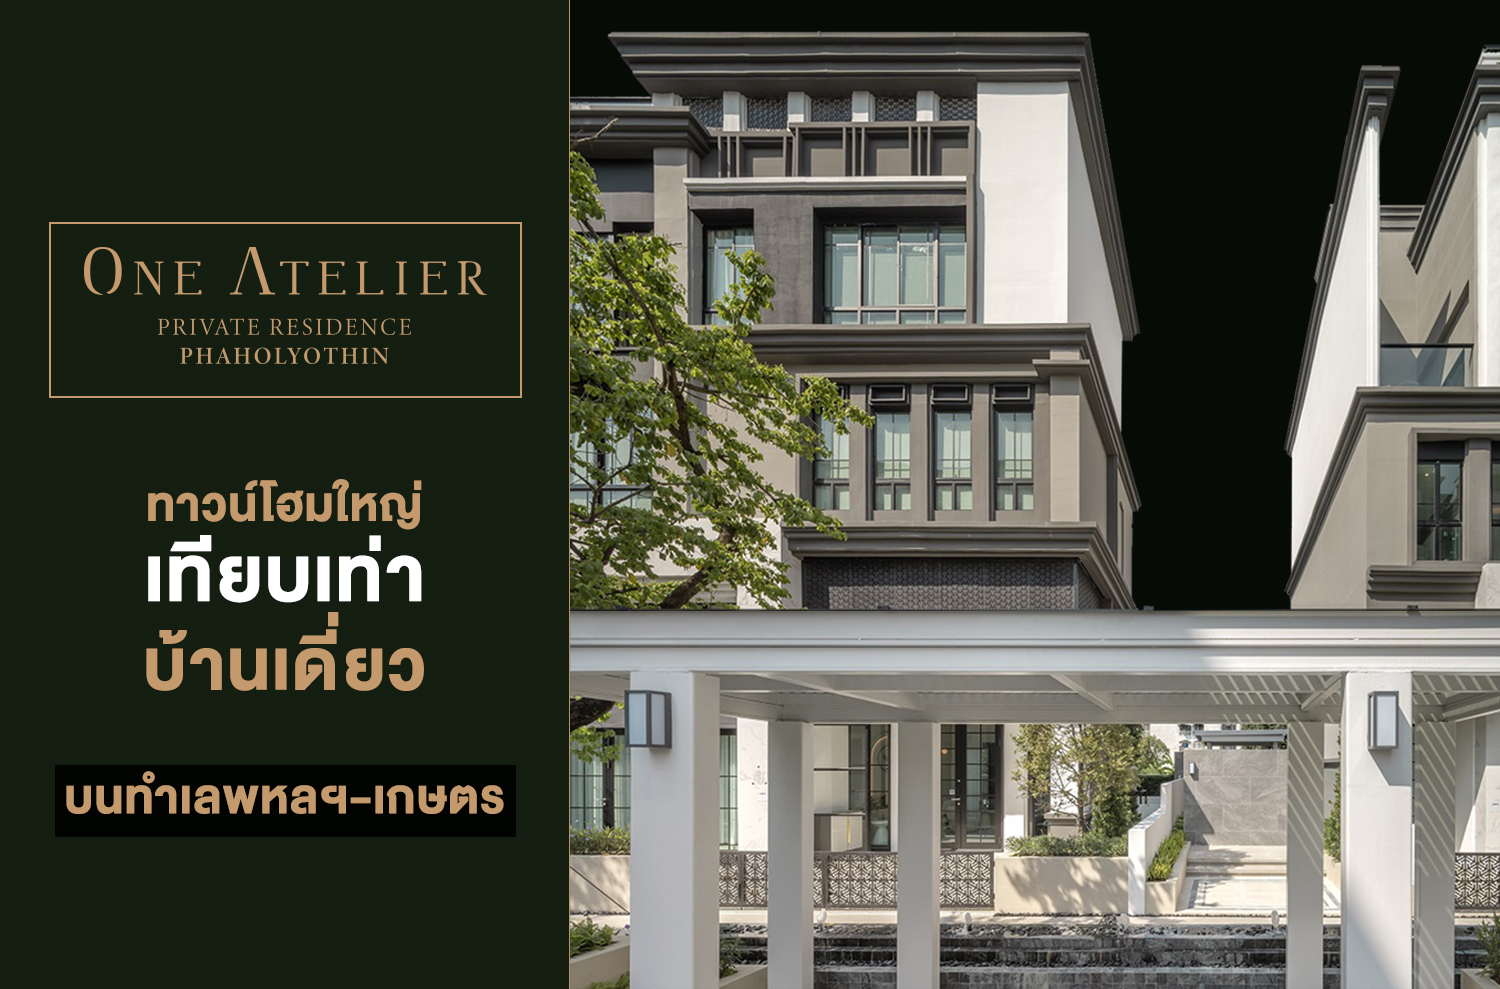 One Atelier Private Residence Phaholyothin ทาวน์โฮมใหญ่เทียบเท่าบ้านเดี่ยว บนทำเลพหลฯ-เกษตร